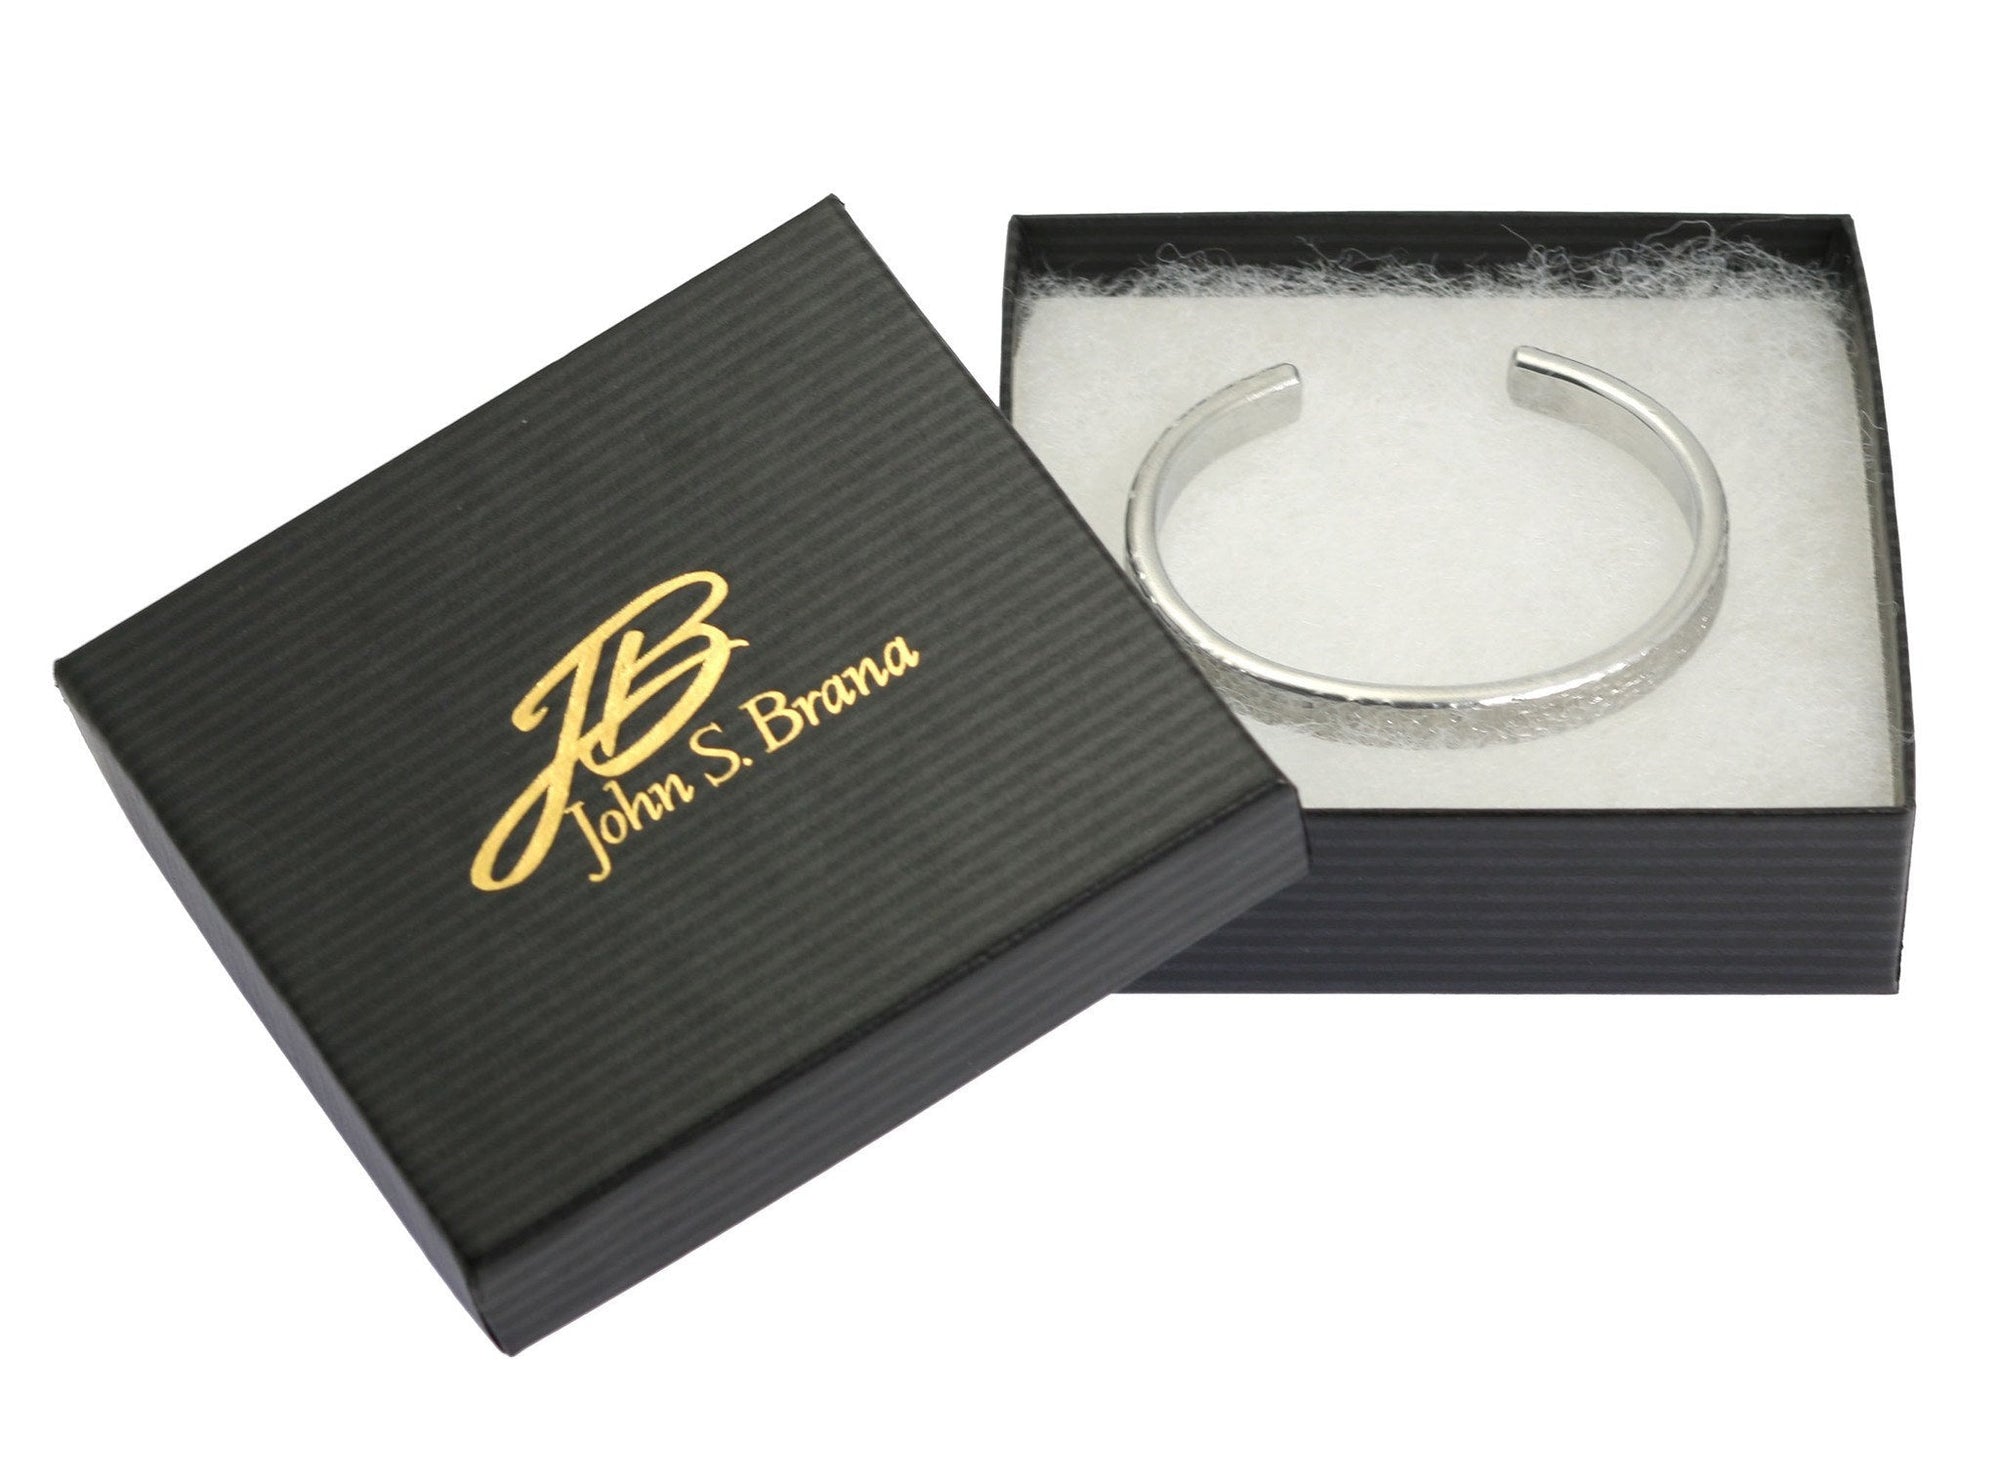 Thin Texturized Aluminum Cuff Bracelet in Gift Box